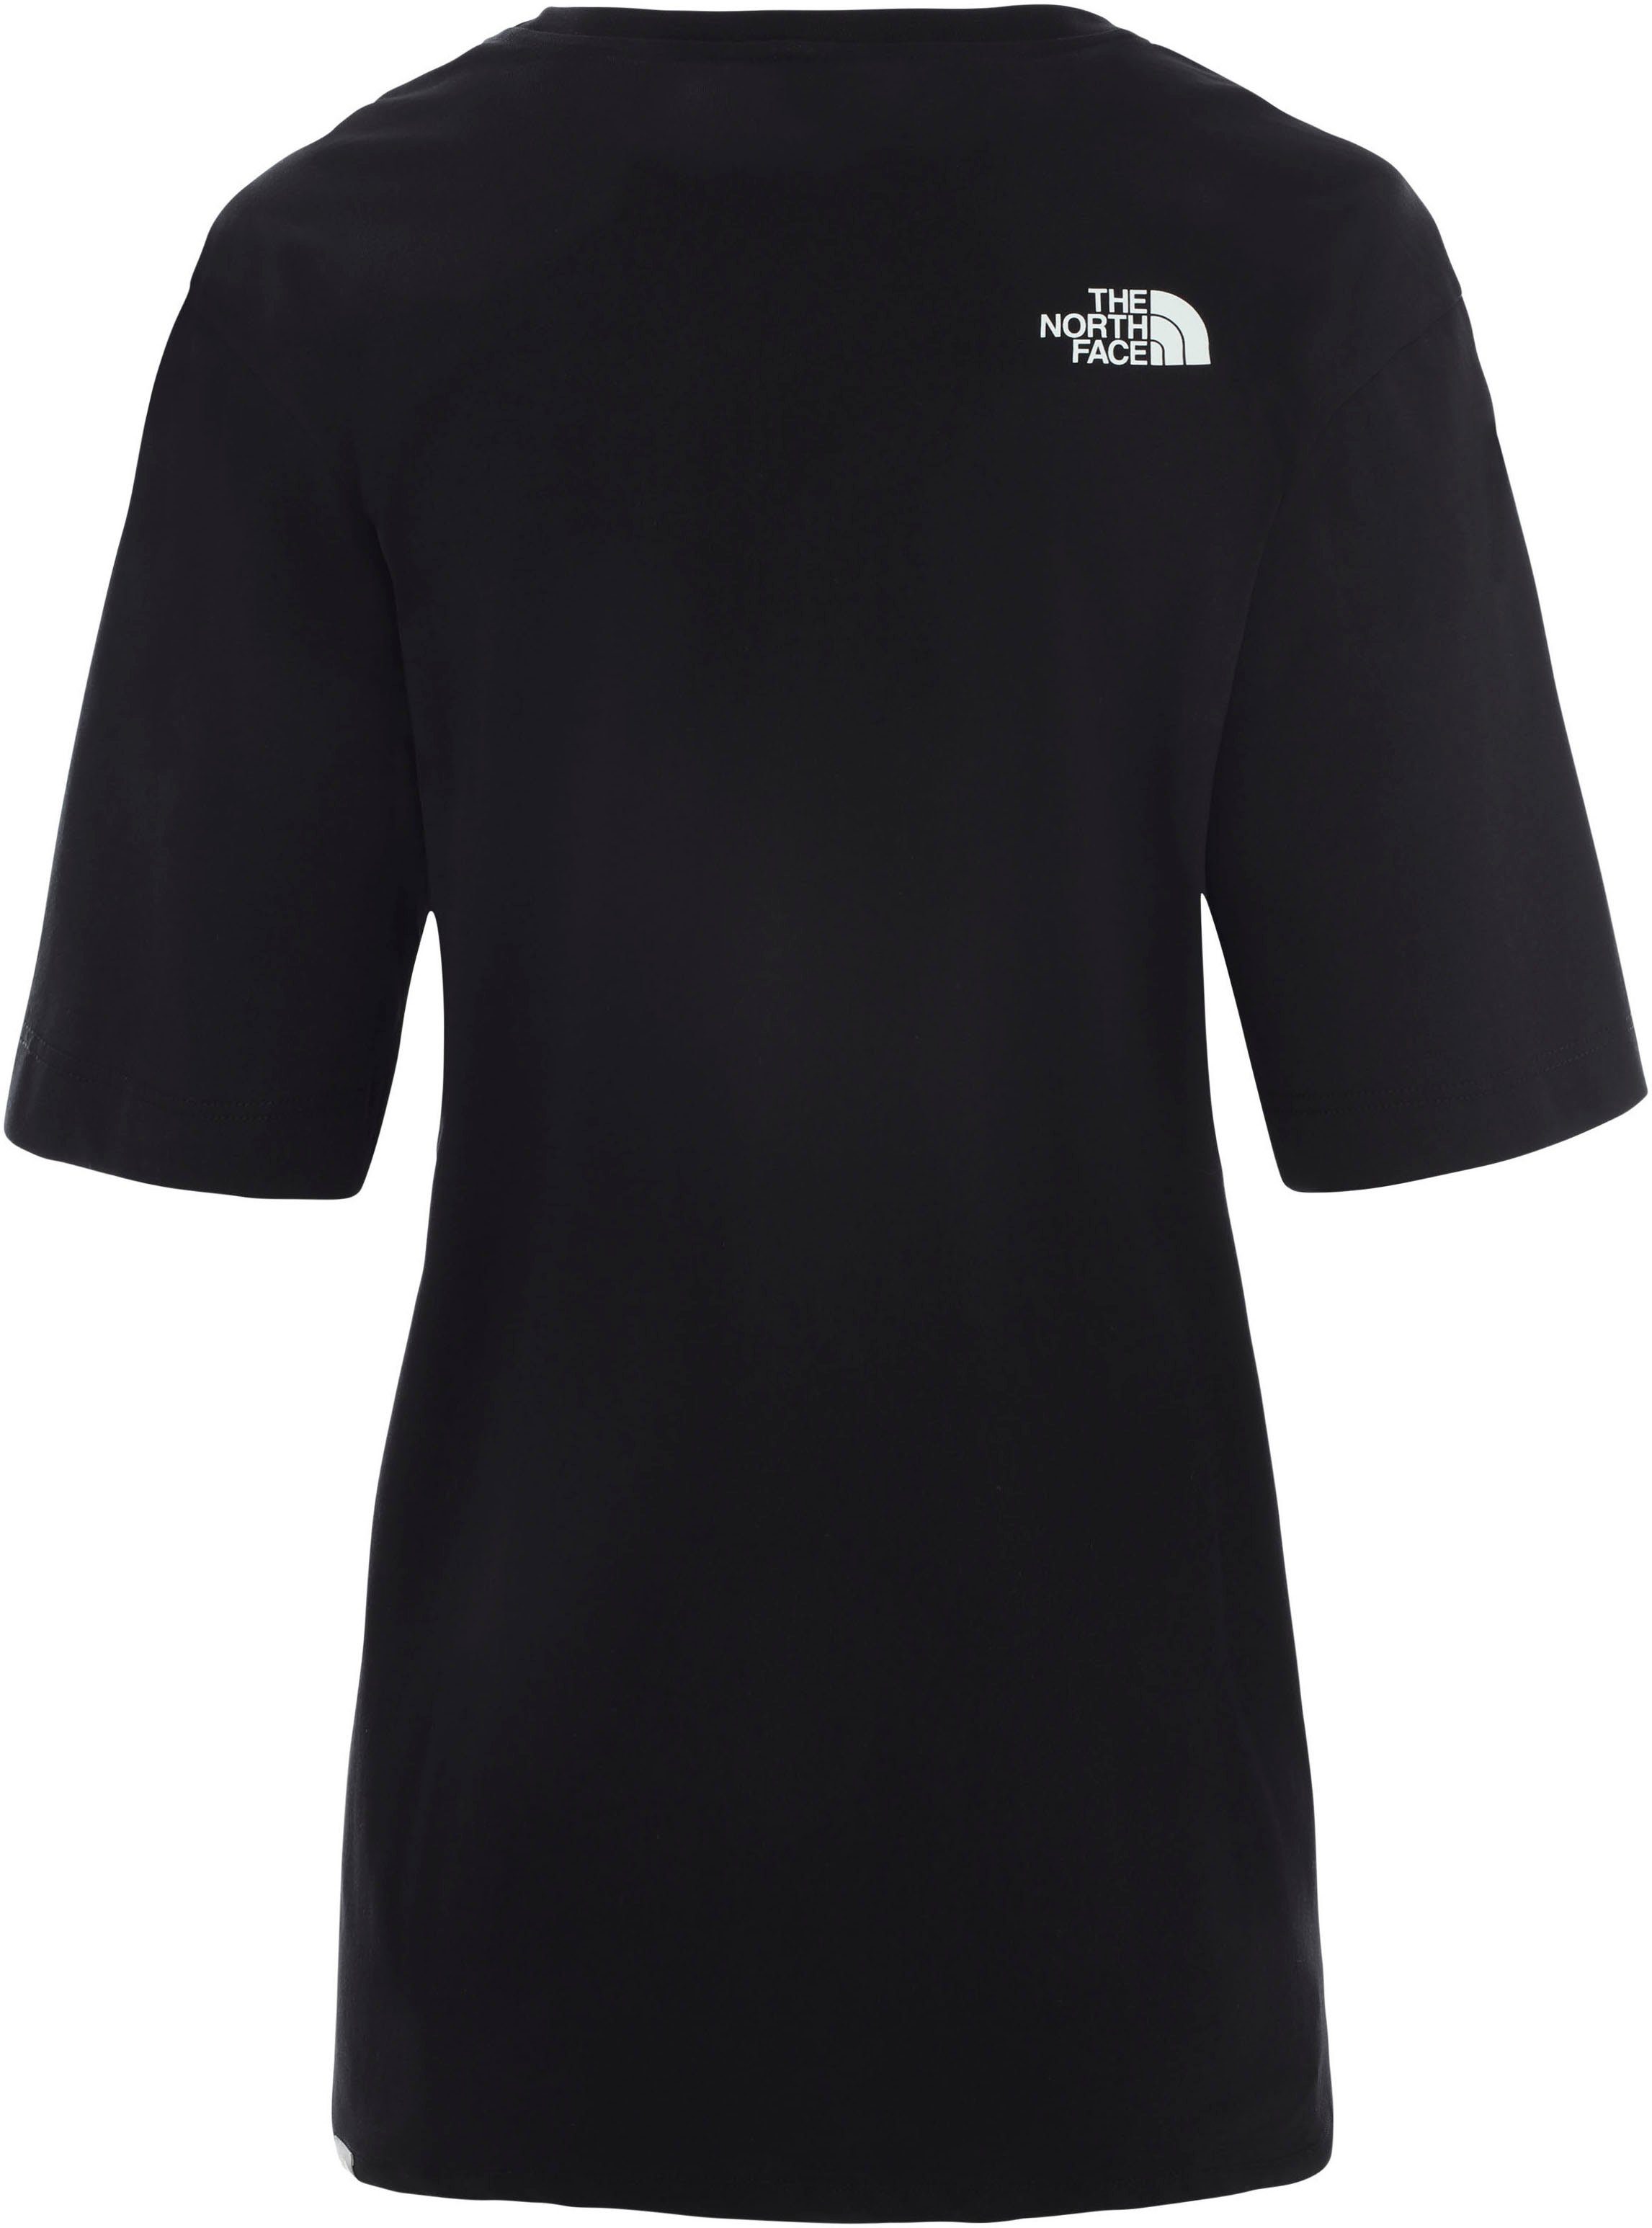 RELAXED Brust black TEE auf mit The der W EASY Logodruck T-Shirt Face North